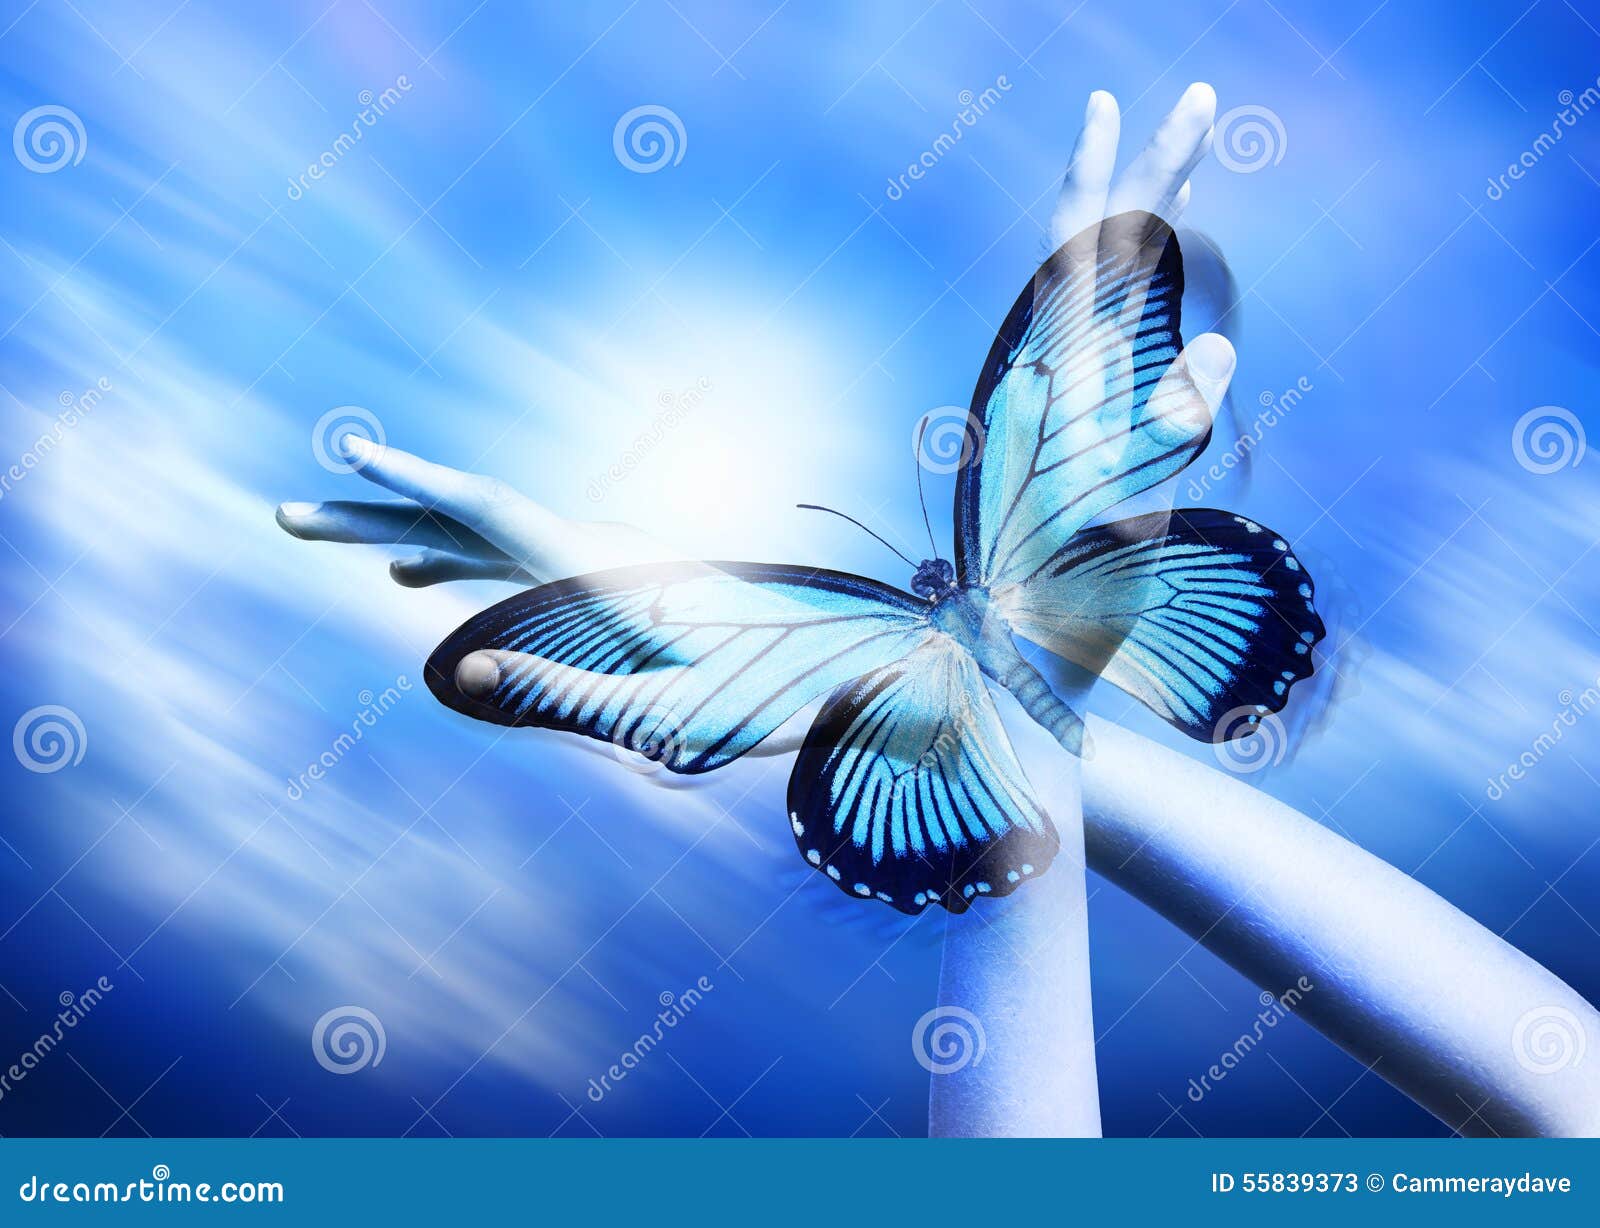 spirituality hands butterfly transformation psychology